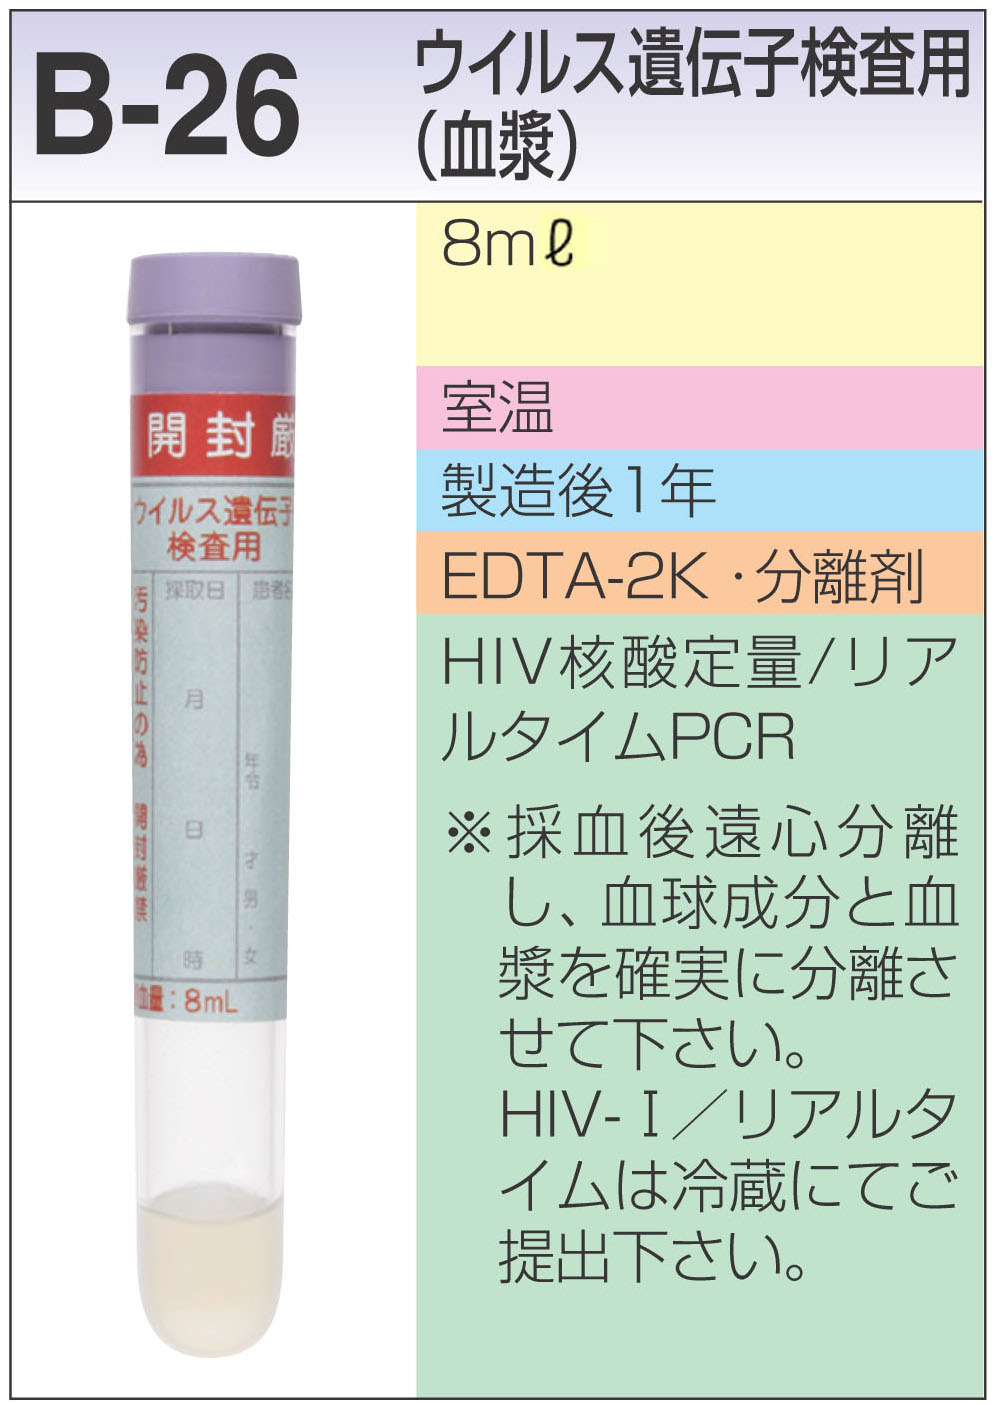 BML(HIV BML(B-26